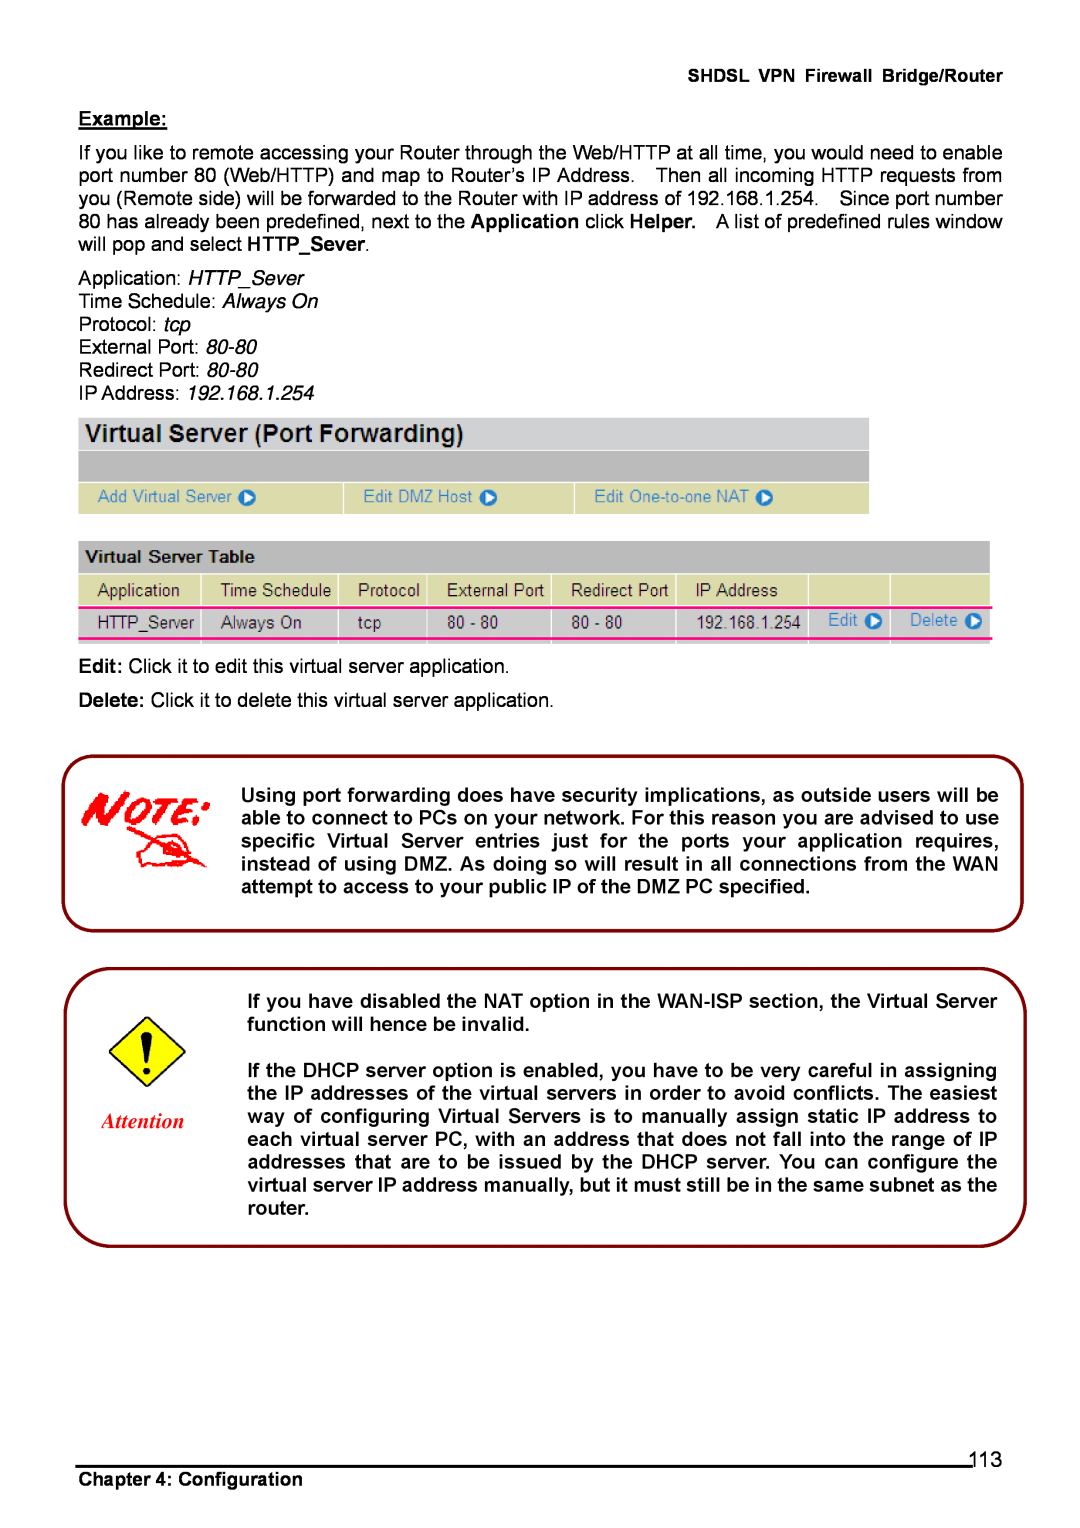 Billion Electric Company 8501 user manual Example, IP Address 